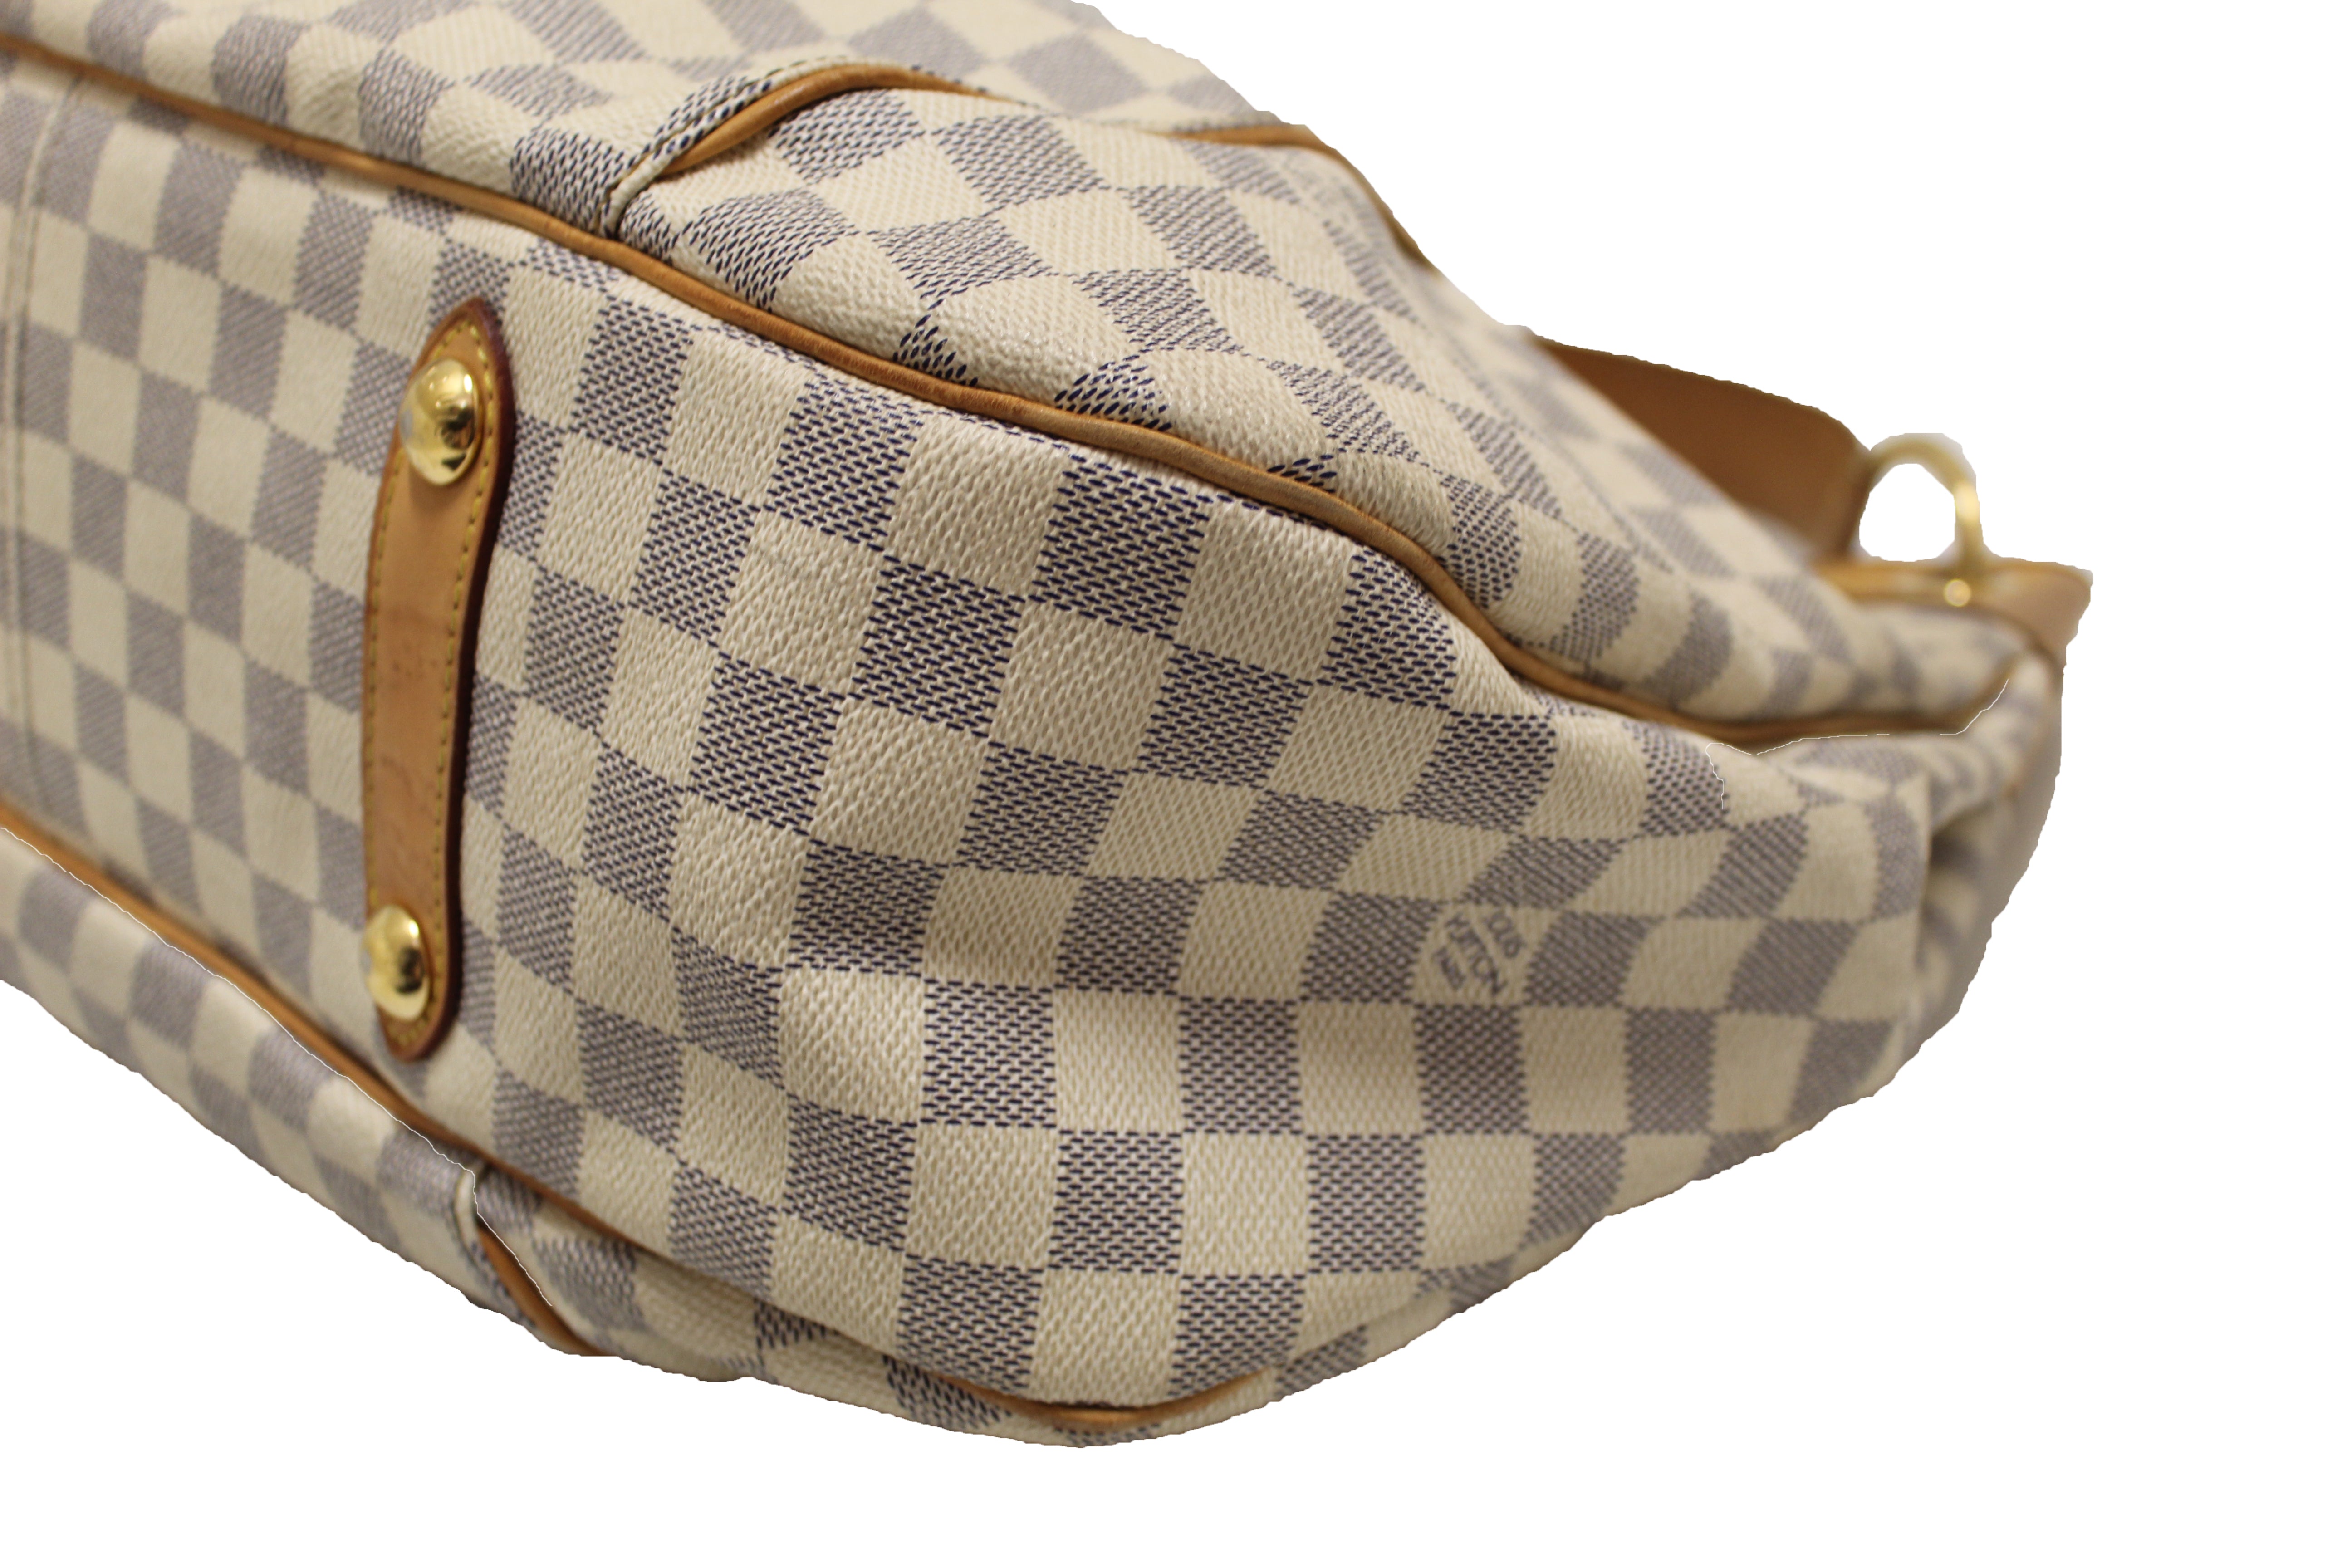 Auth Louis Vuitton Galliera GM Monogram Hobo Shoulder Handbag